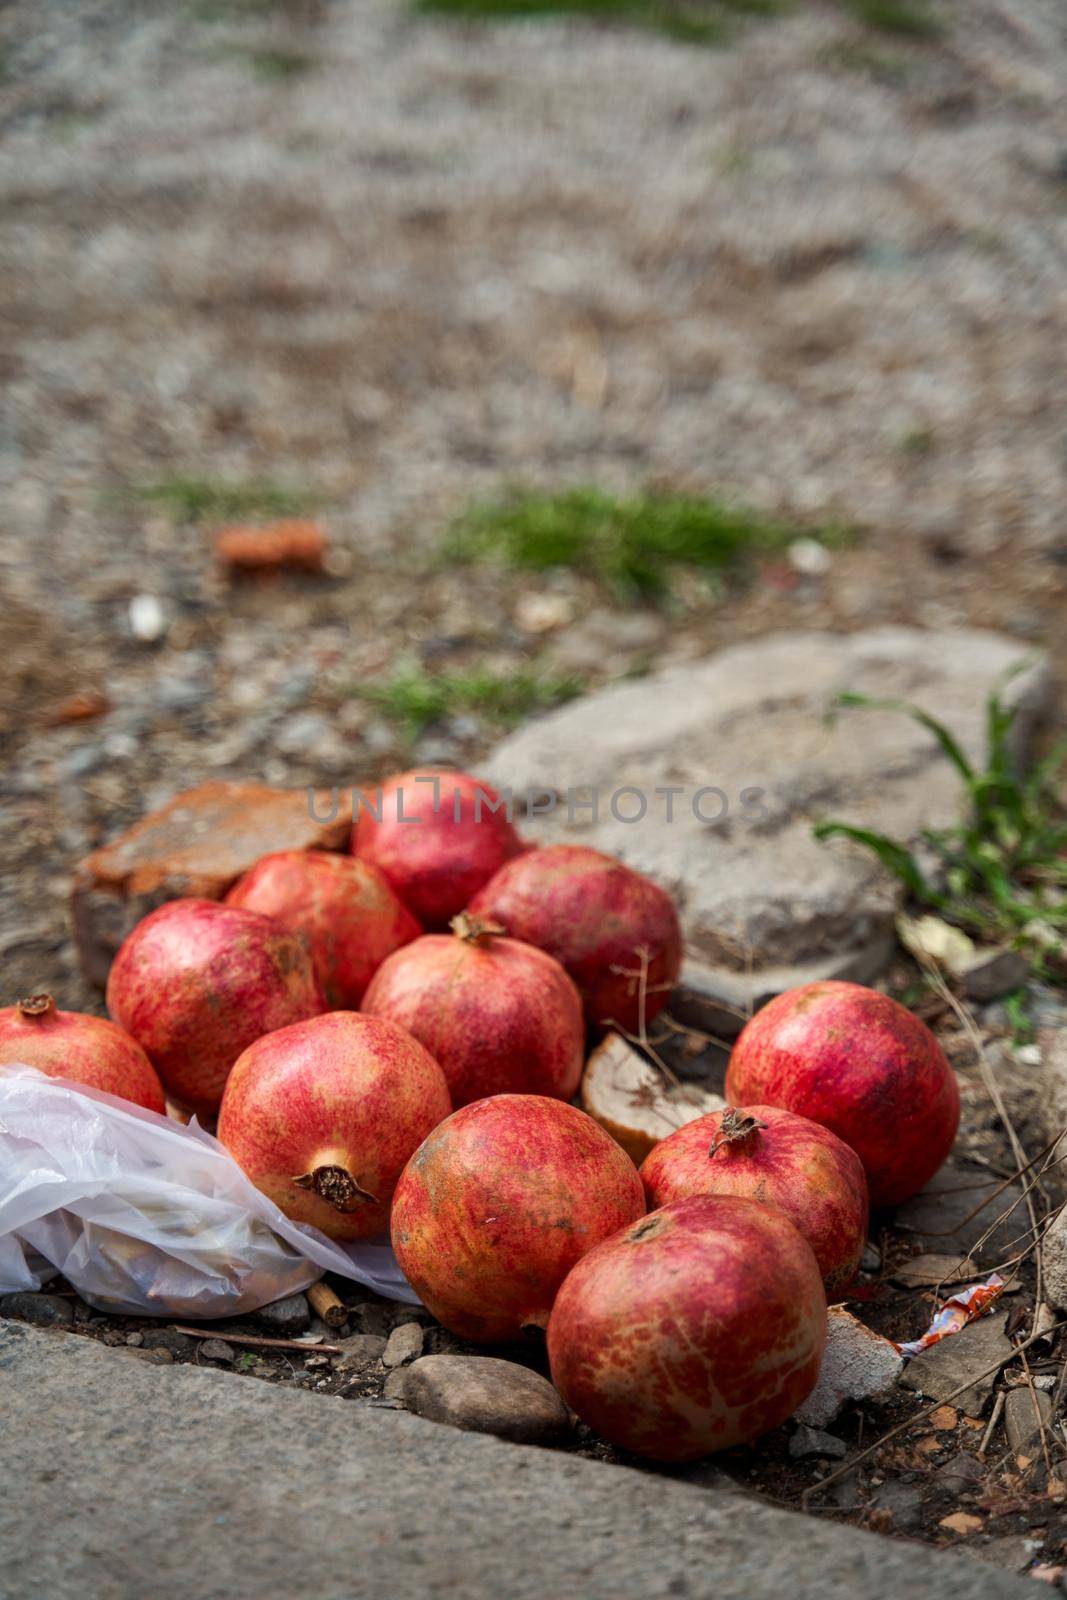 Ripe pomegranate fruits lie near the trash can. Help the homeless.